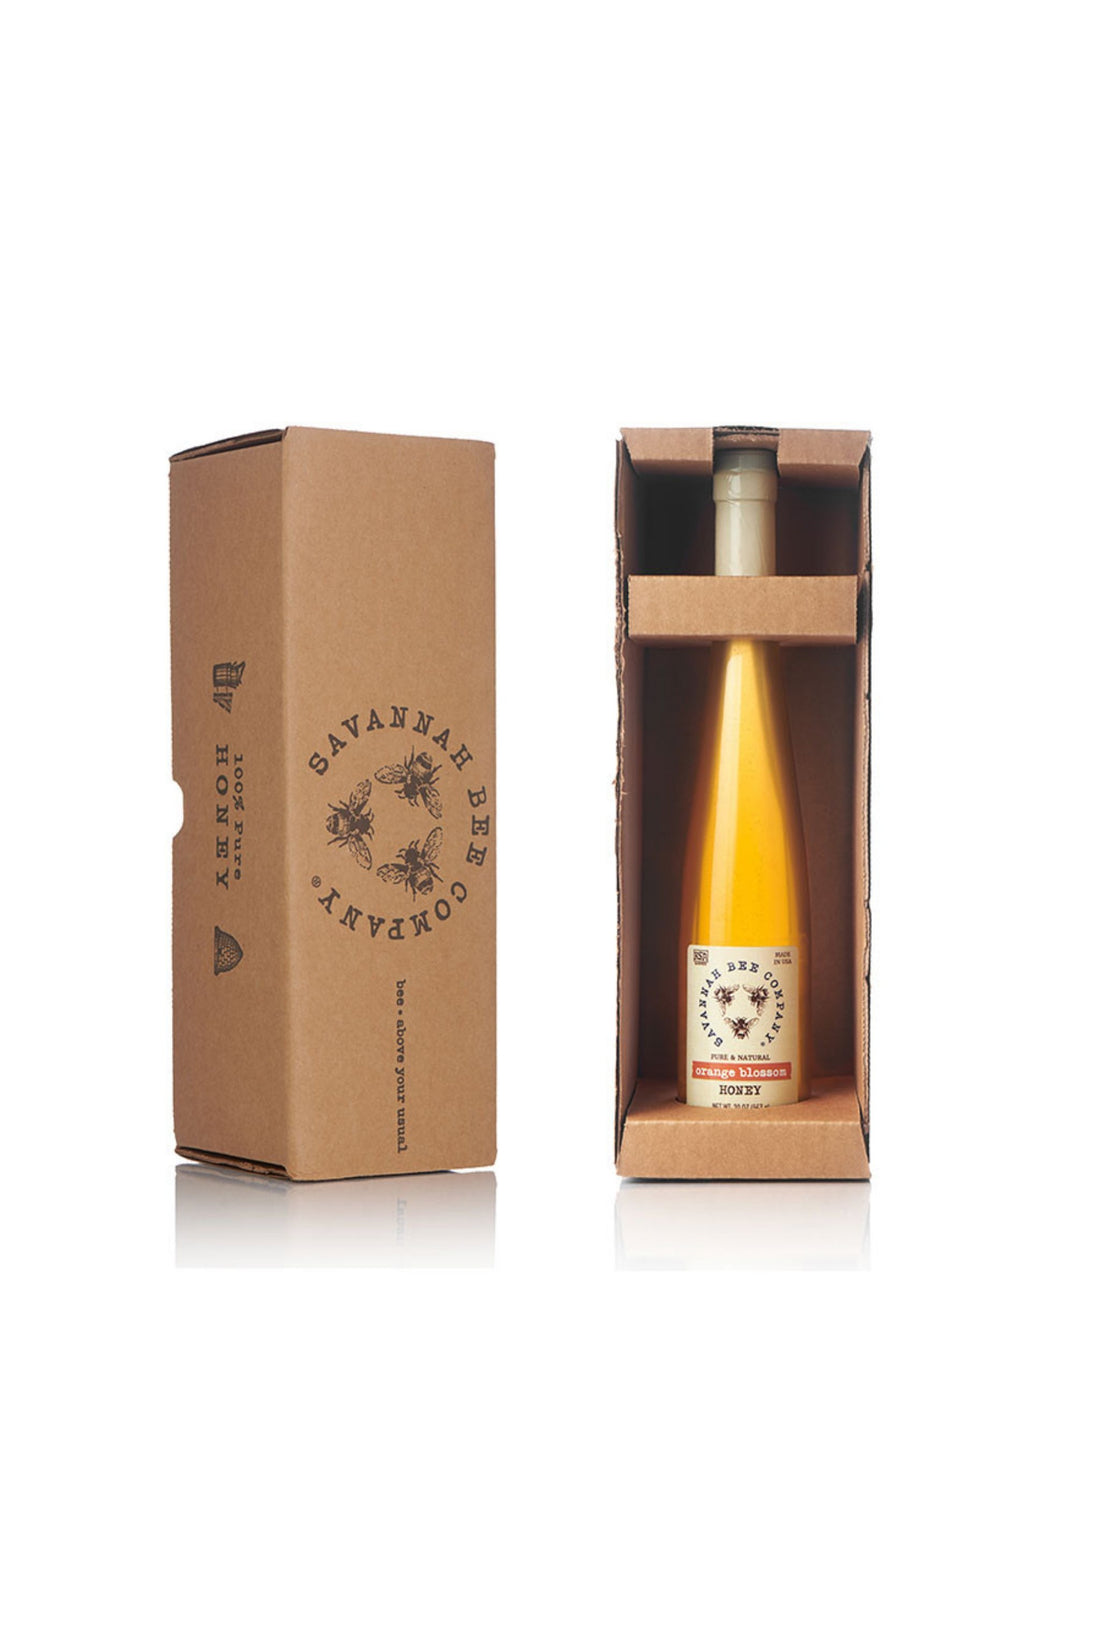 Pure & Natural Orange Blossom Honey 20 oz. flute in a gift box